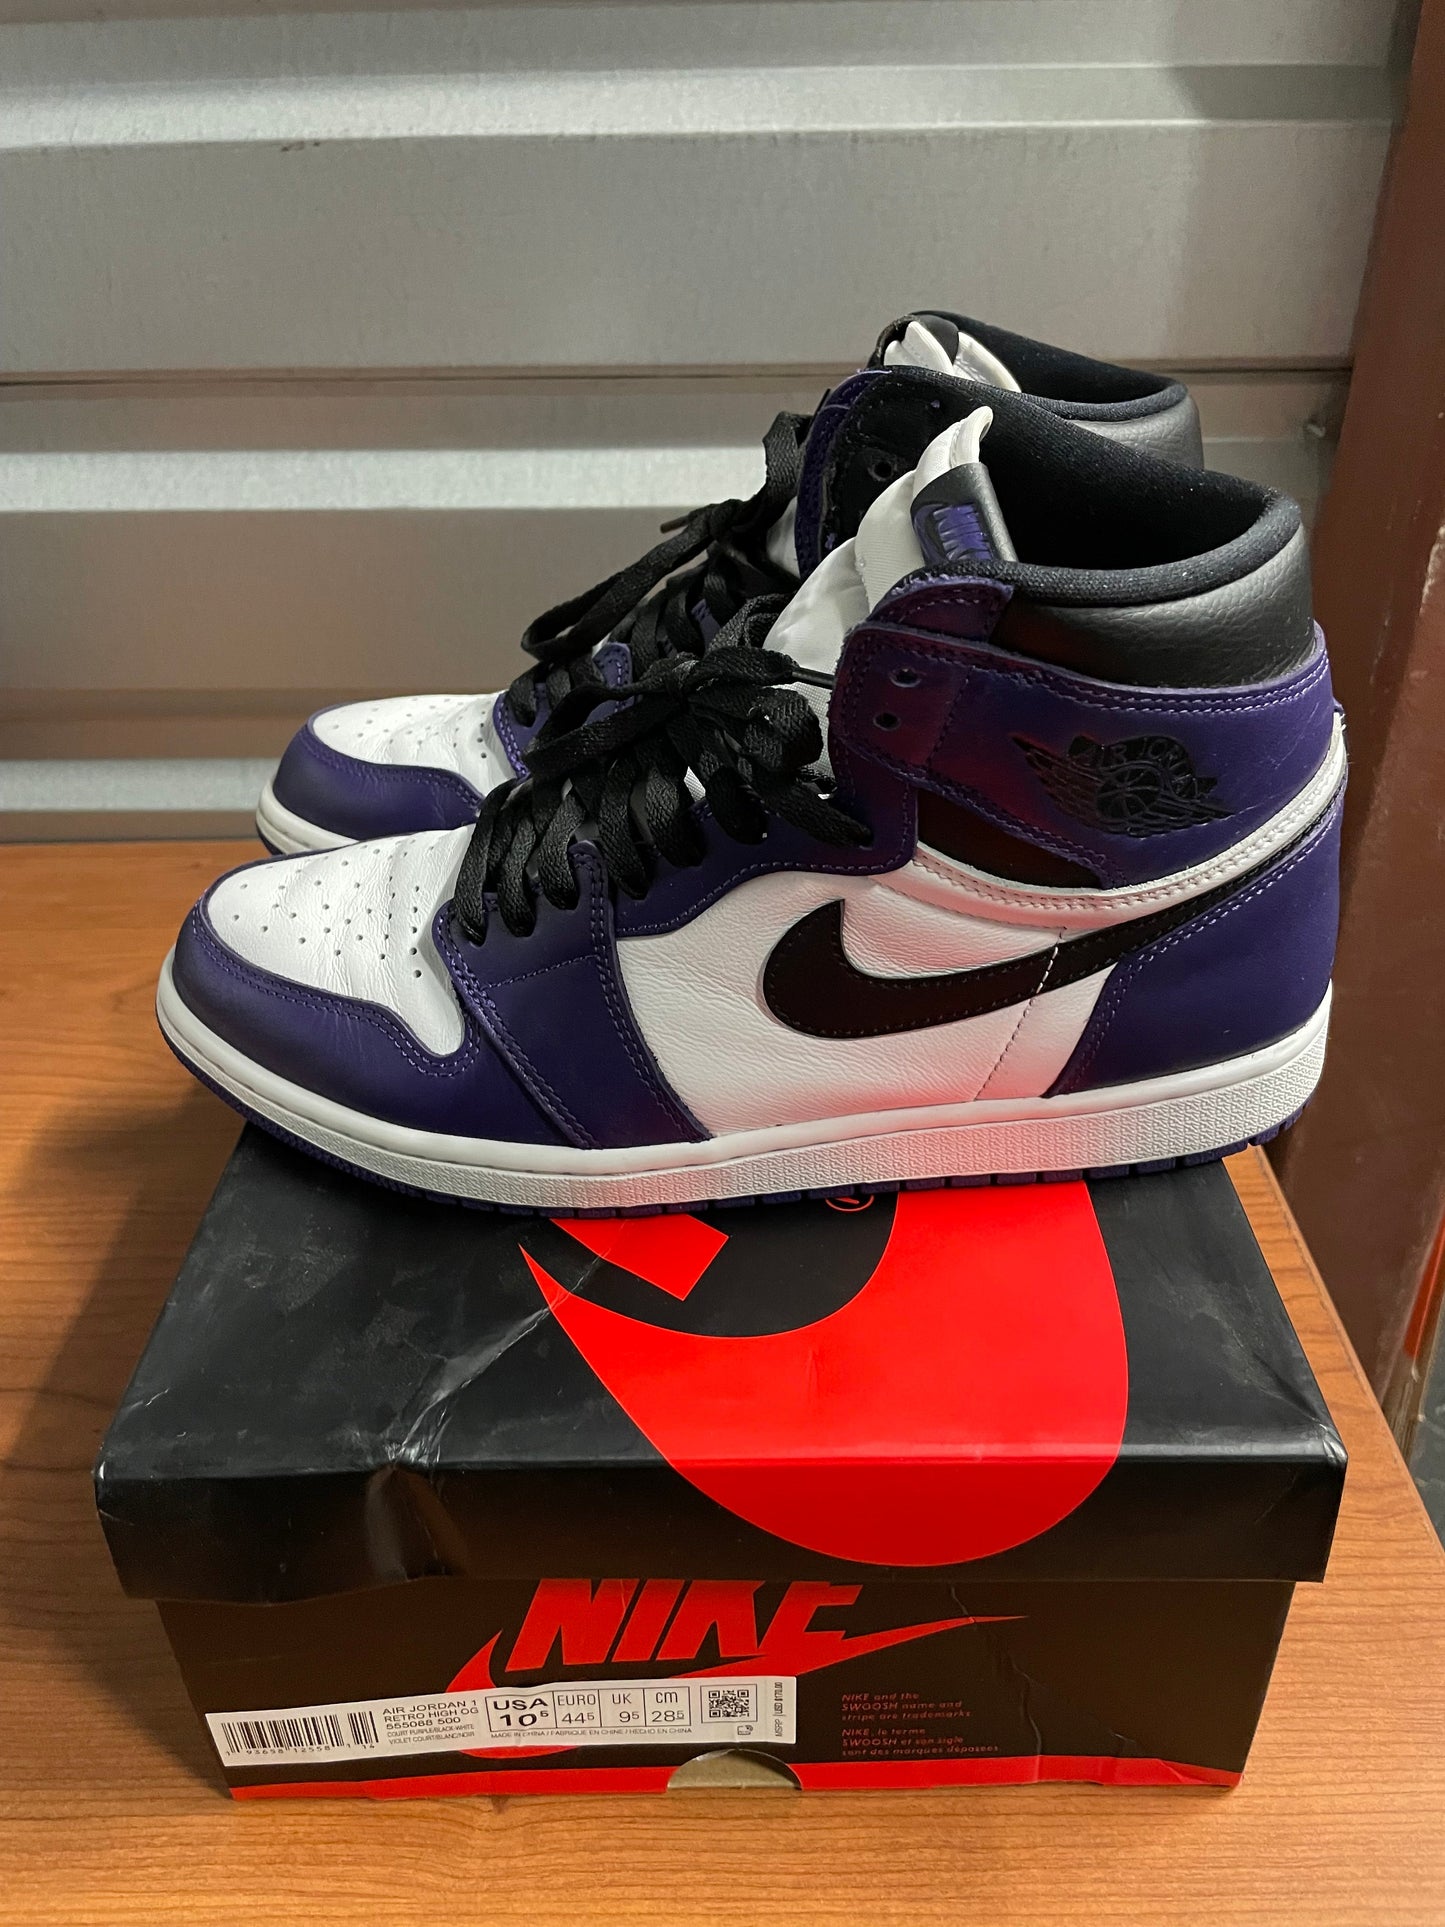 Jordan 1 "Court Purple White"